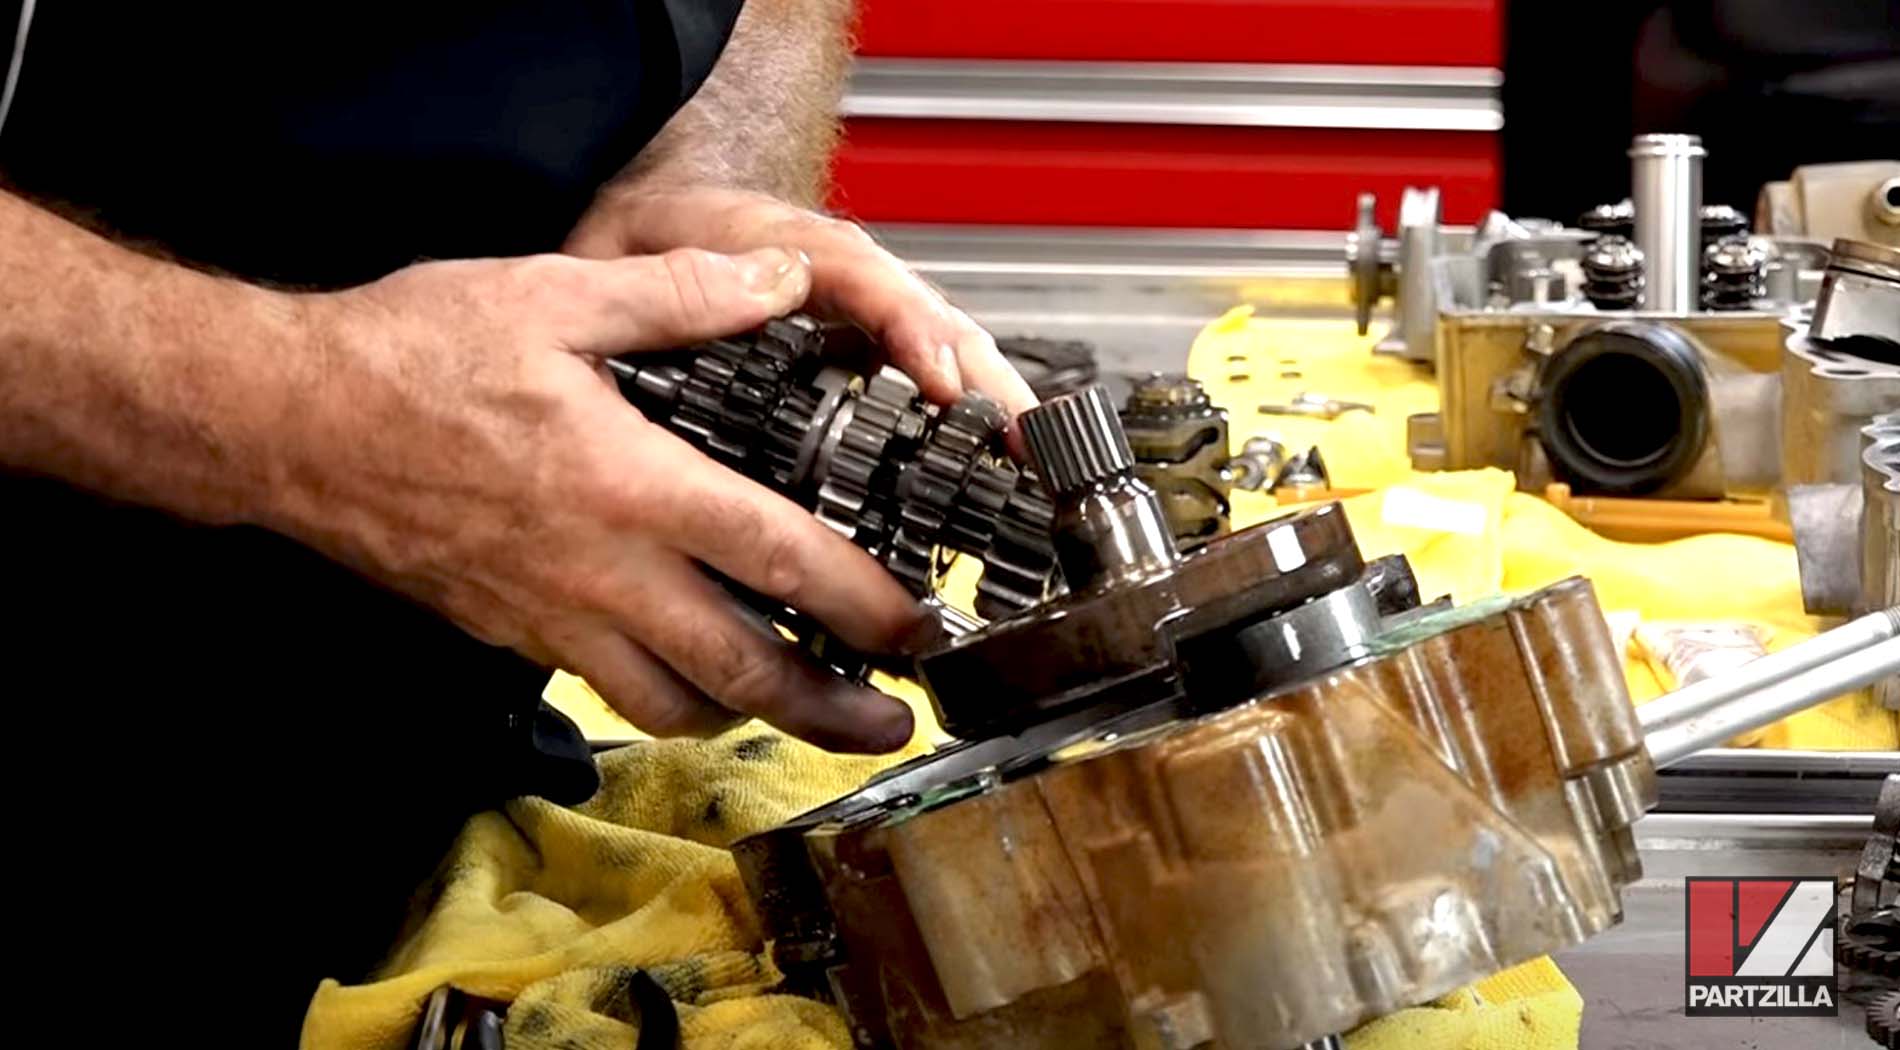 Honda CRF450 engine transmission removal